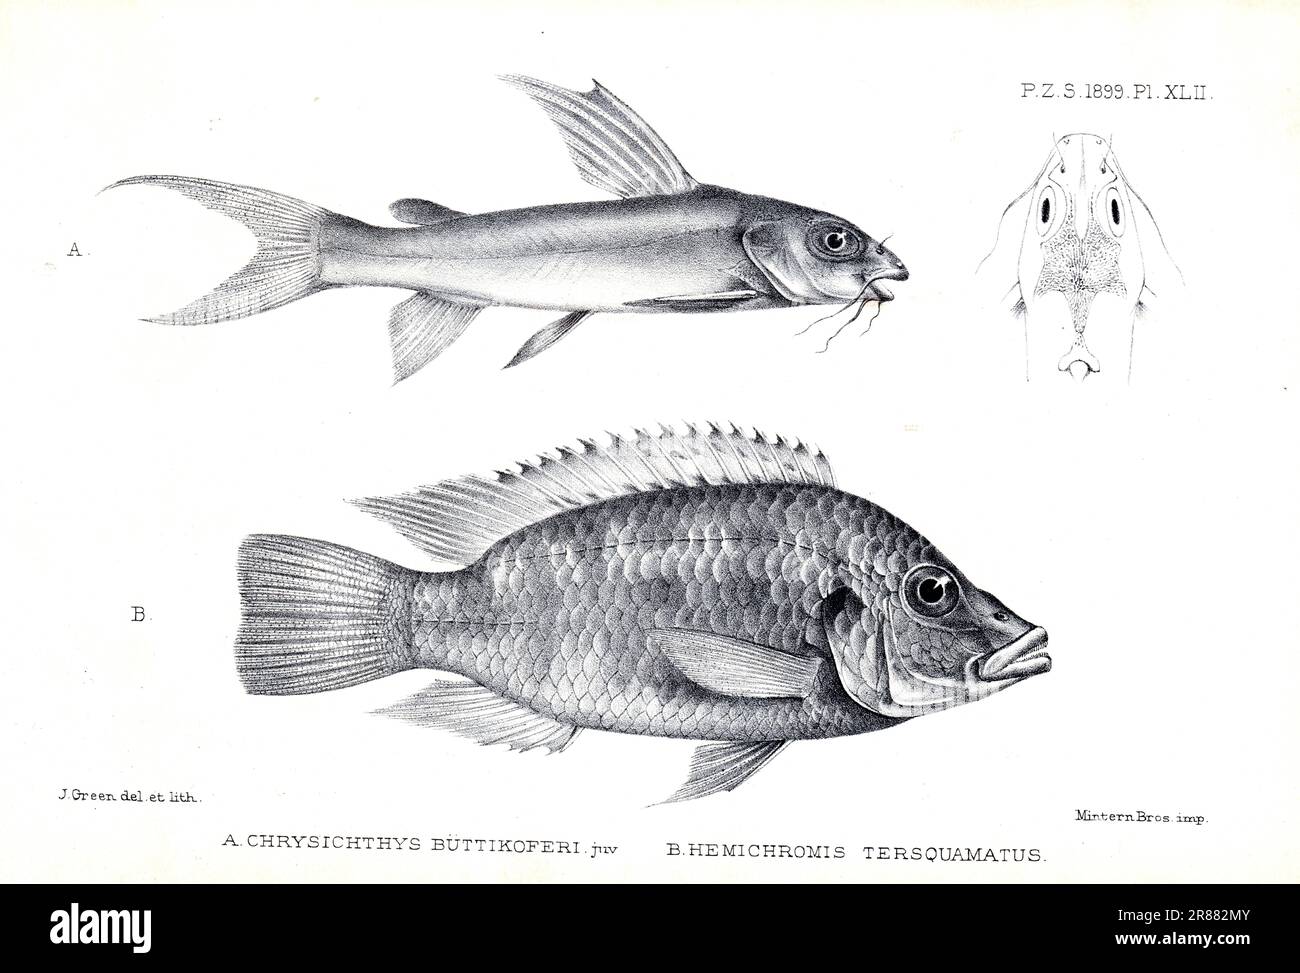 Proceedings of the London Zoological Society 1899 - Chrysichthys Büttikoferi, Hemichromis Tersquamatus by James Green (1859-1938) Stock Photo